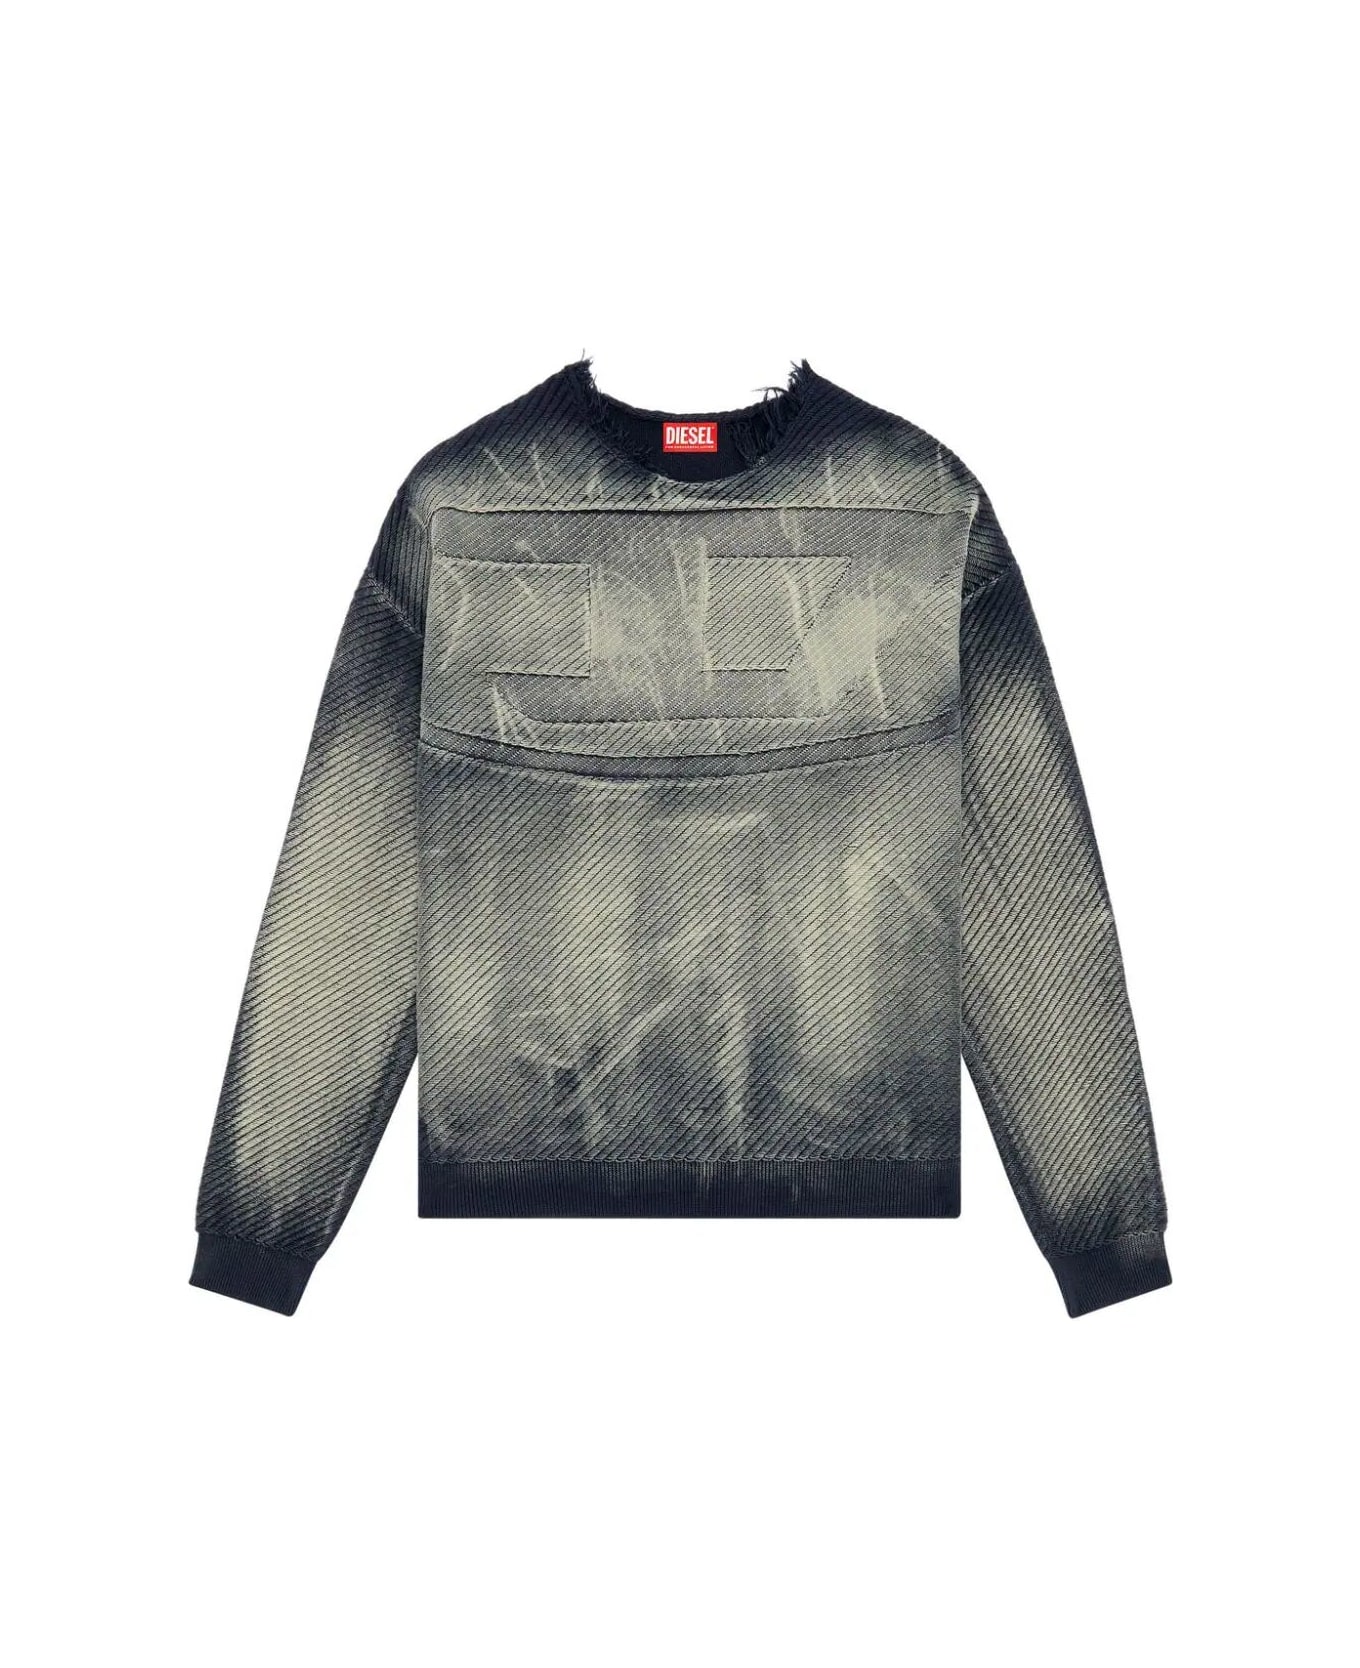 Diesel Klever Sweater - At Grey